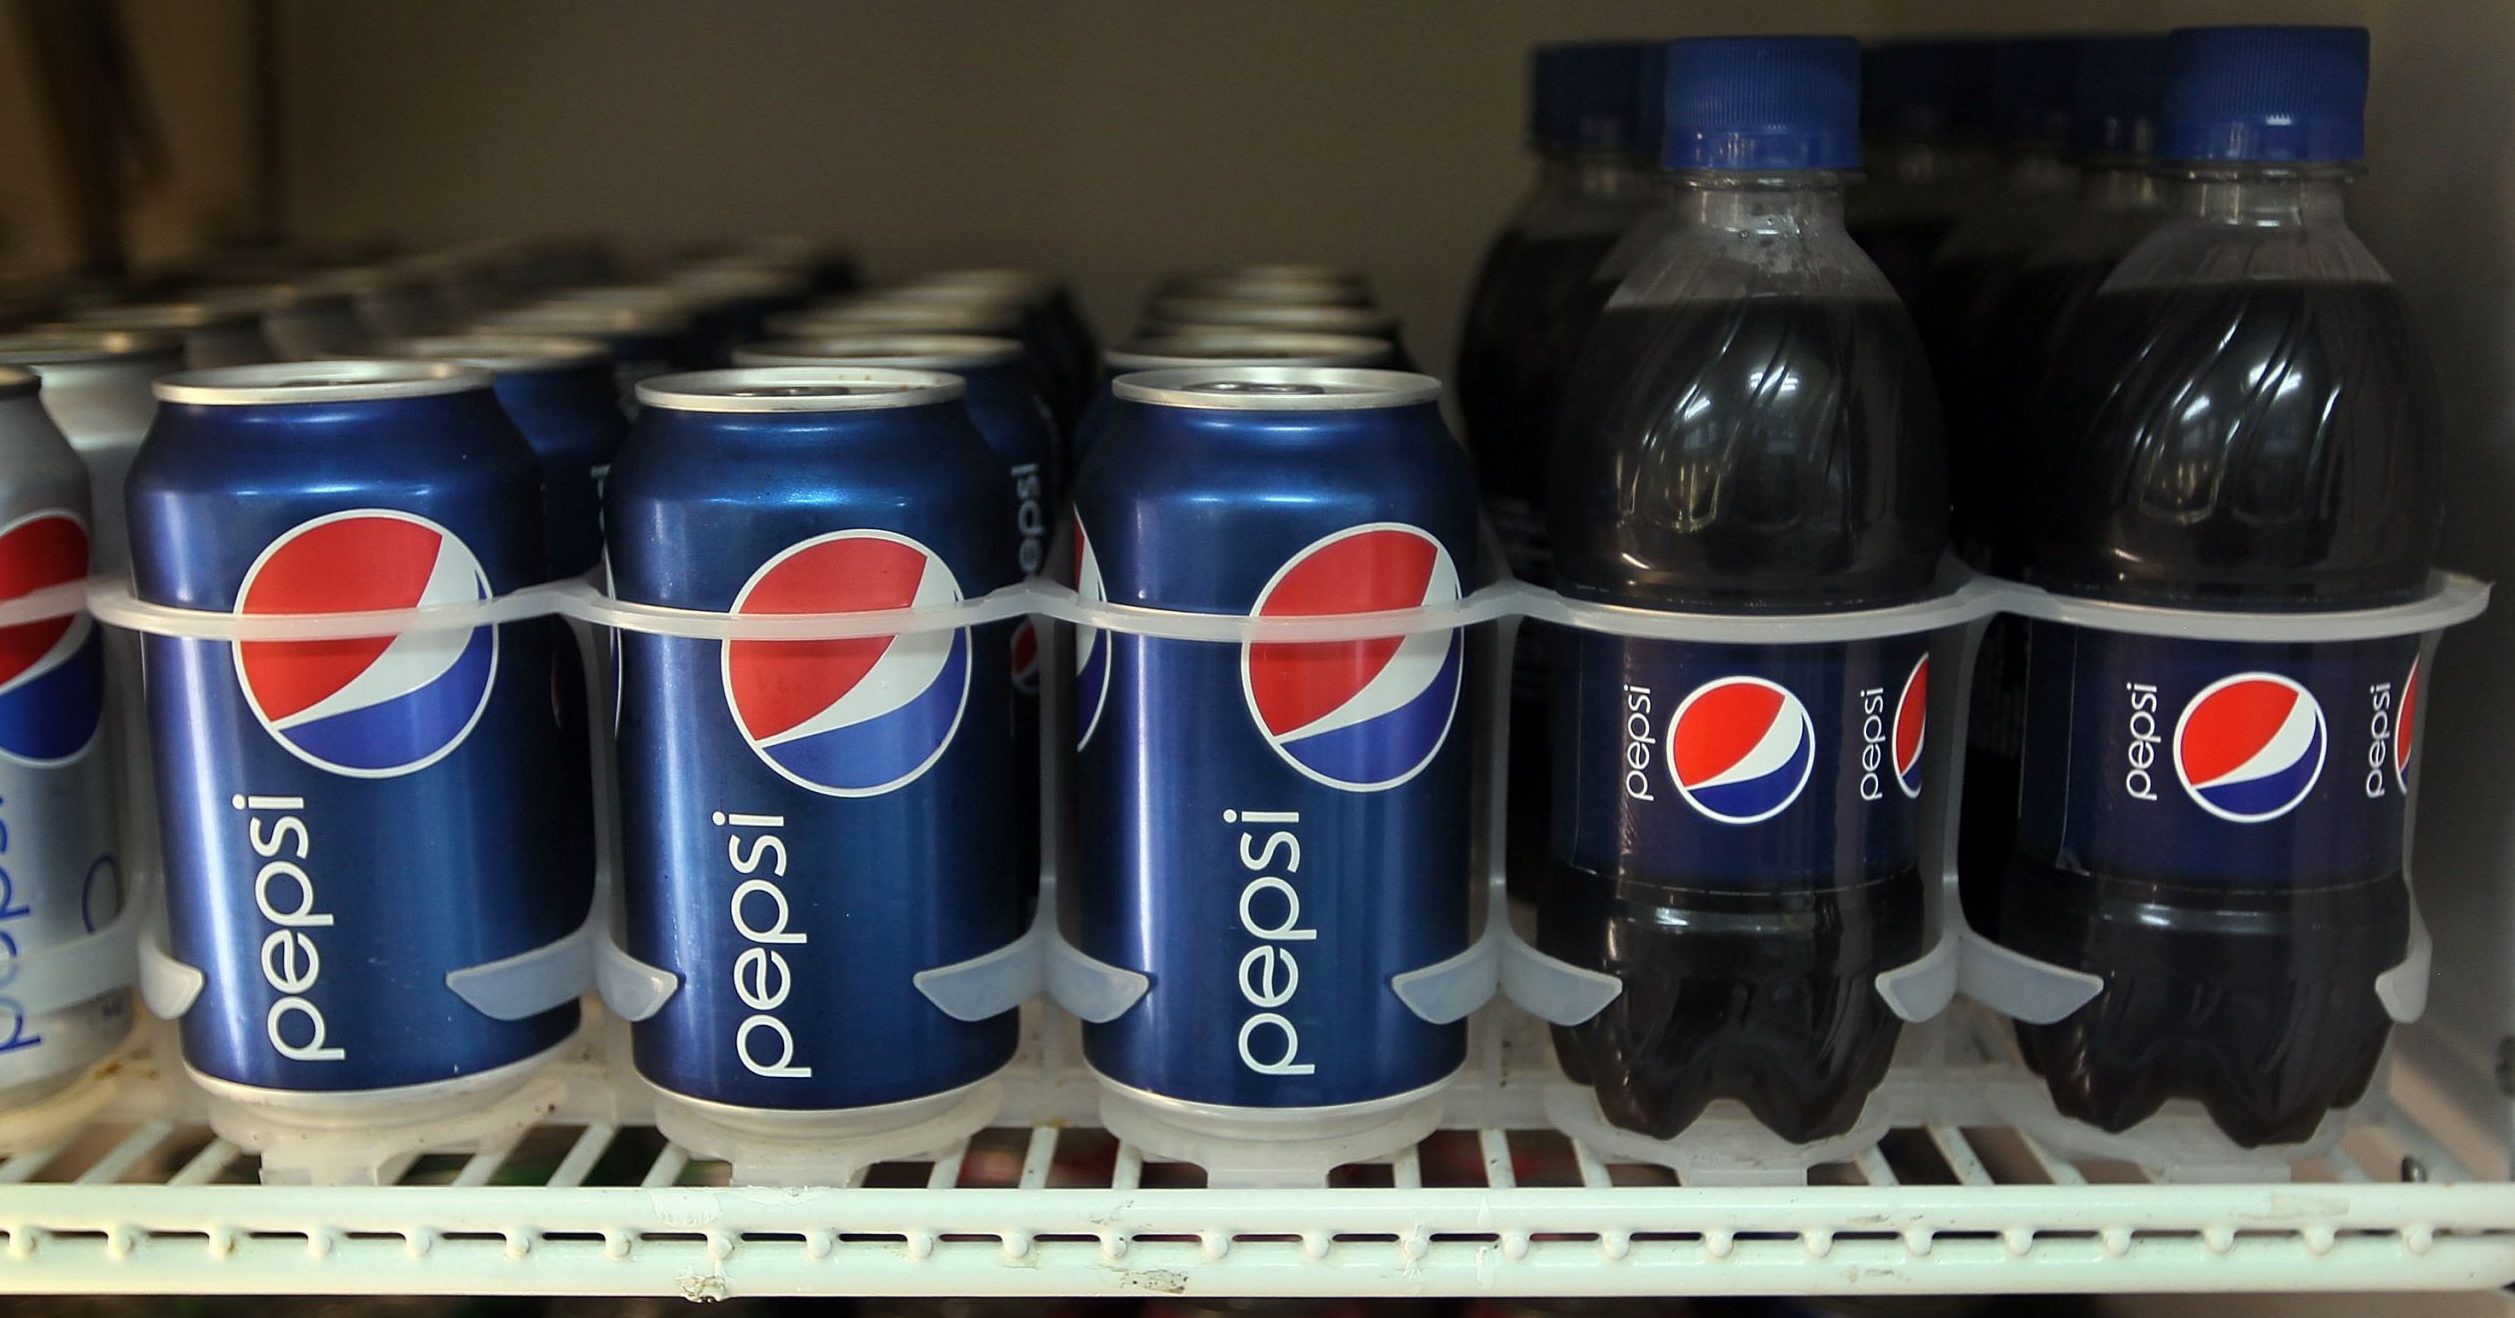 Nitro Pepsi Review: Does It Taste Different Than Regular Pepsi?